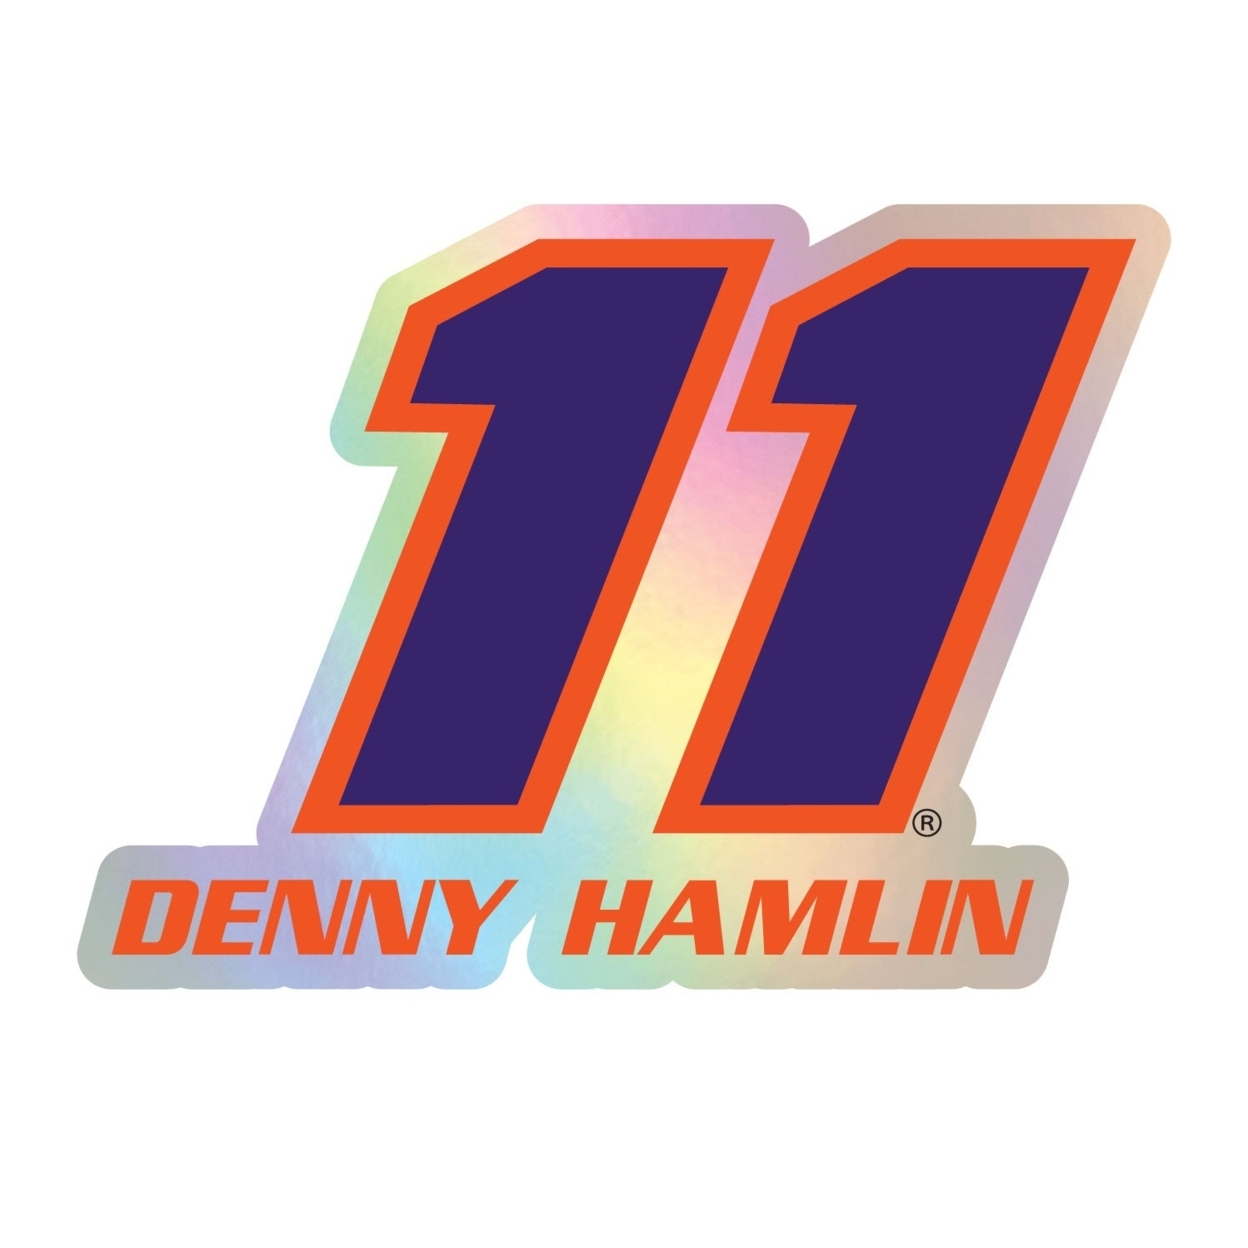 #11 Denny Hamlin Laser Cut Holographic Decal - 2-Inch